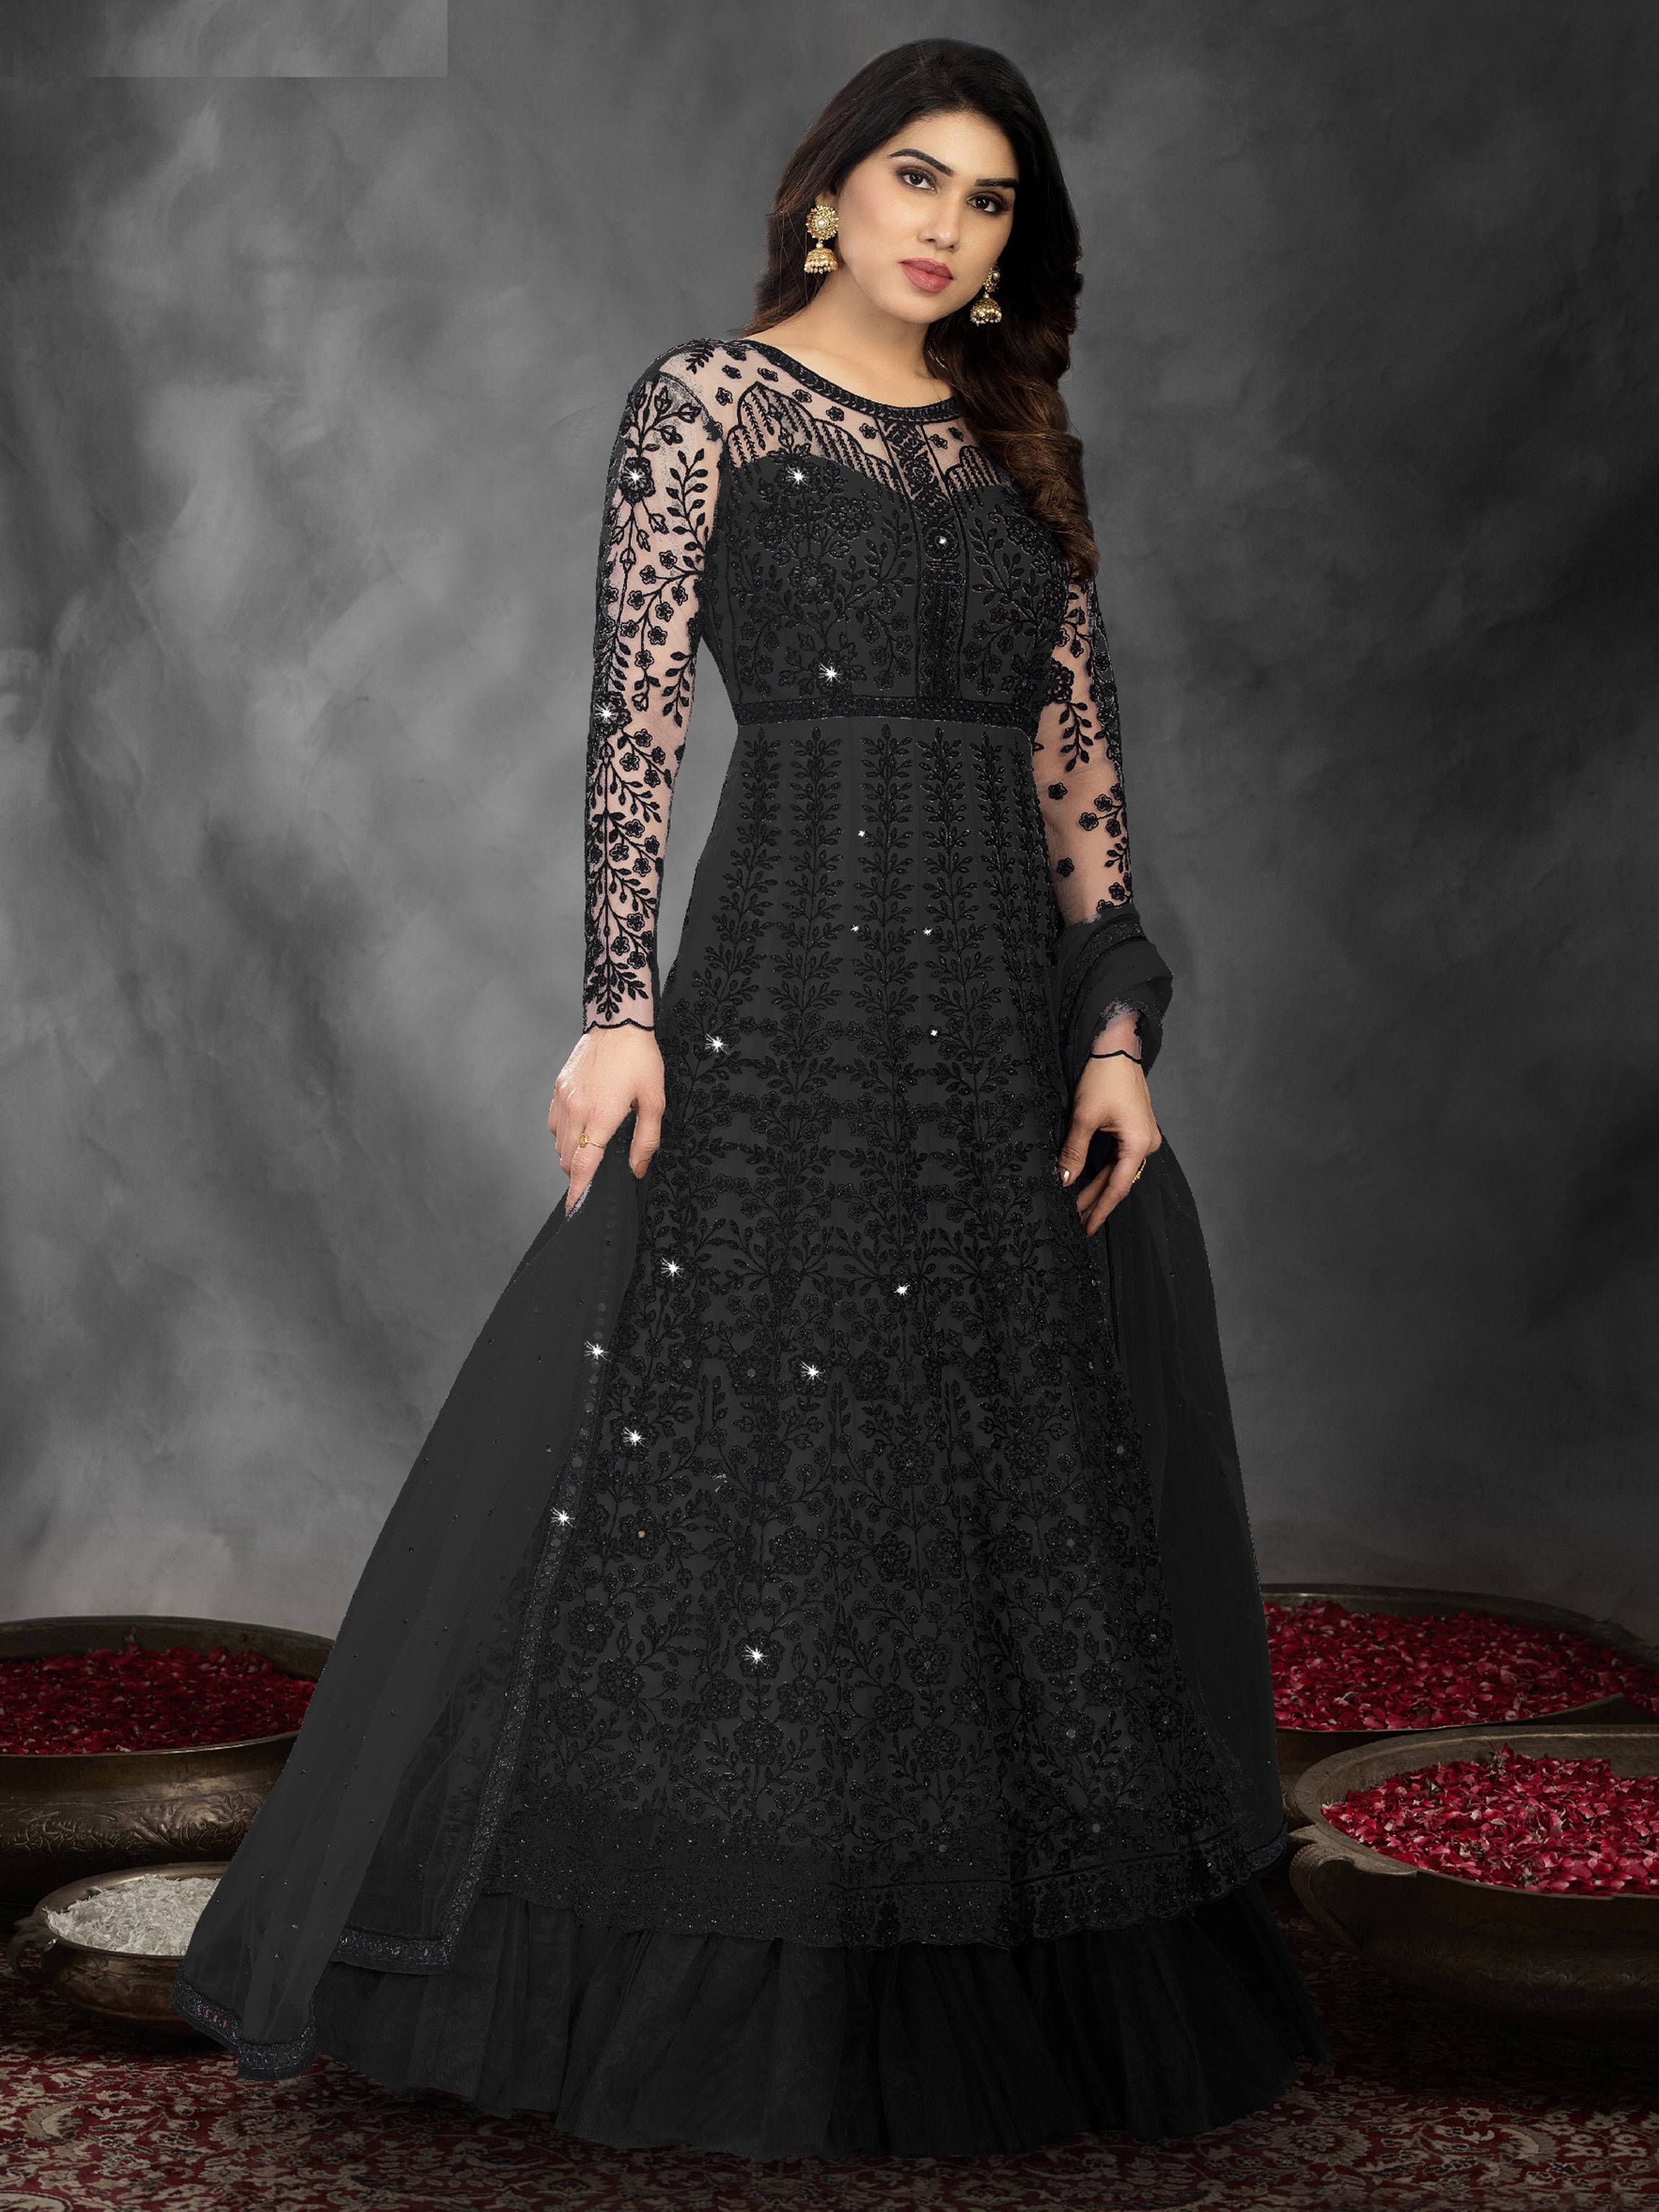 Jaguar | Black net dress, Wear black dresses, Net dress design